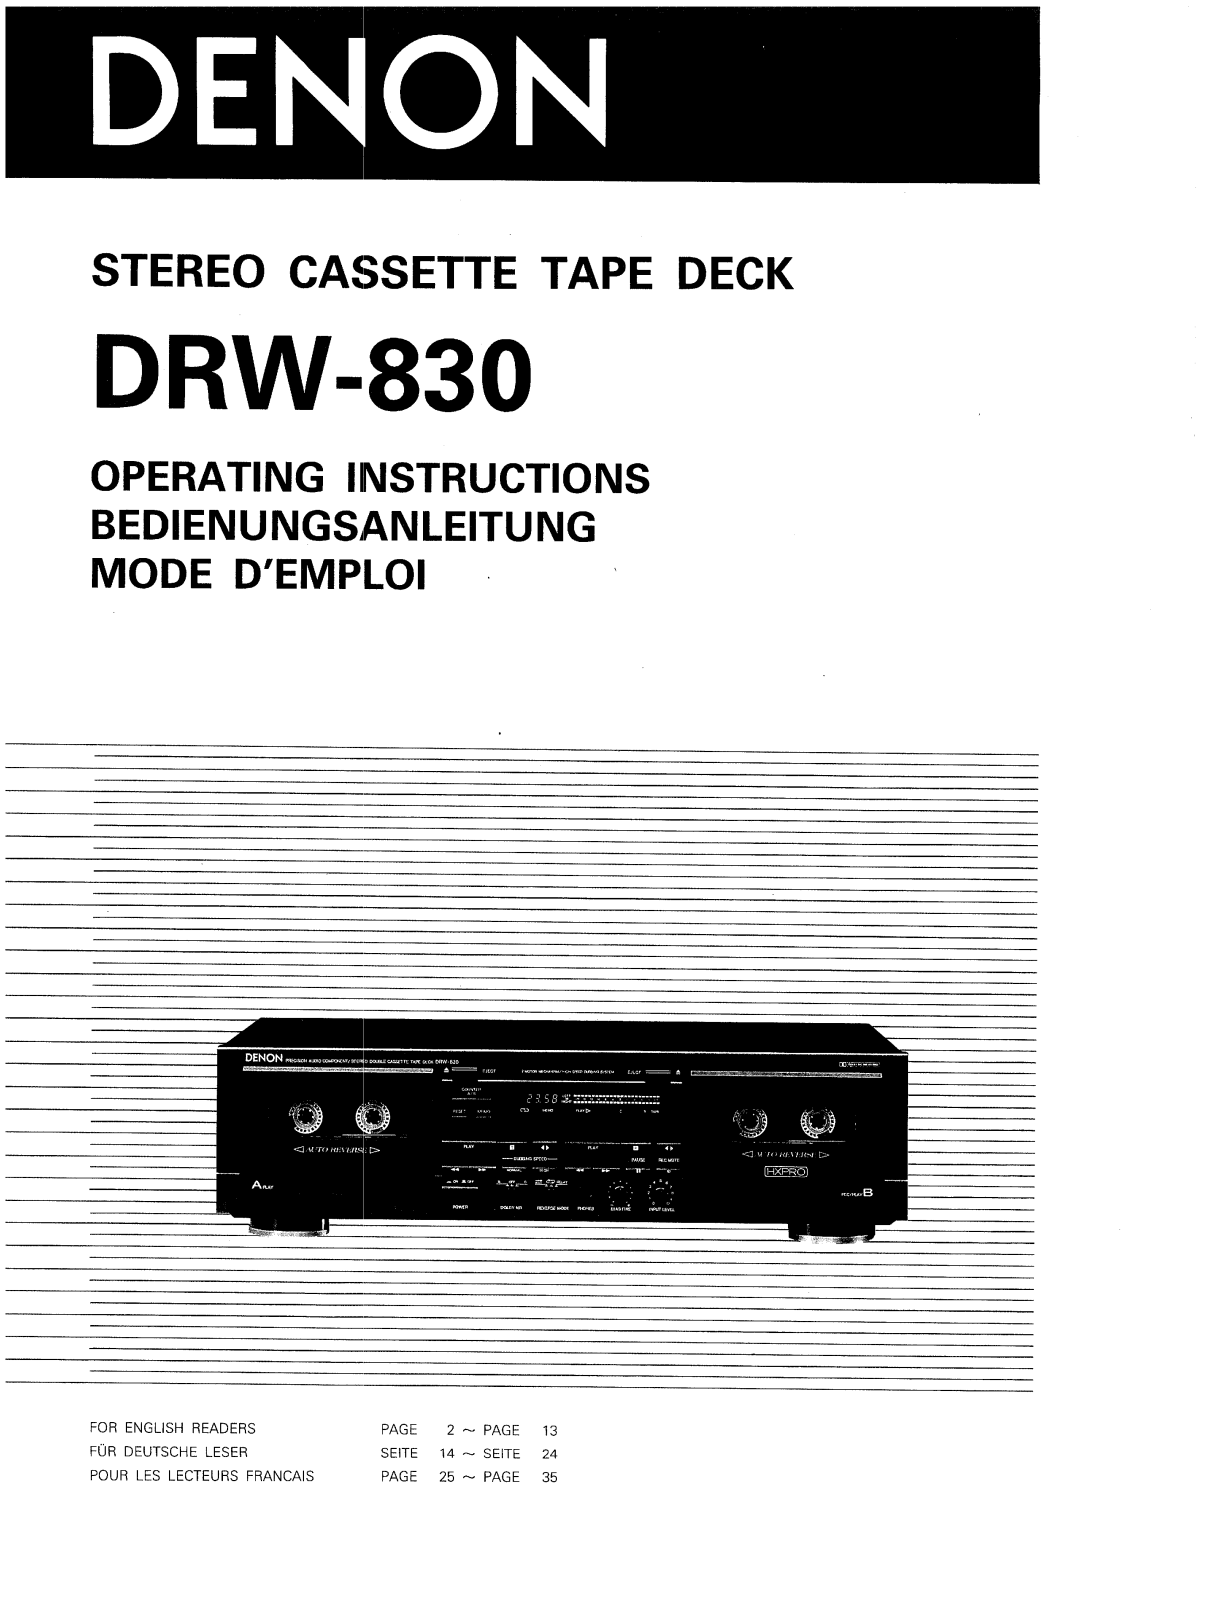 Denon DRW-830 Owner's Manual